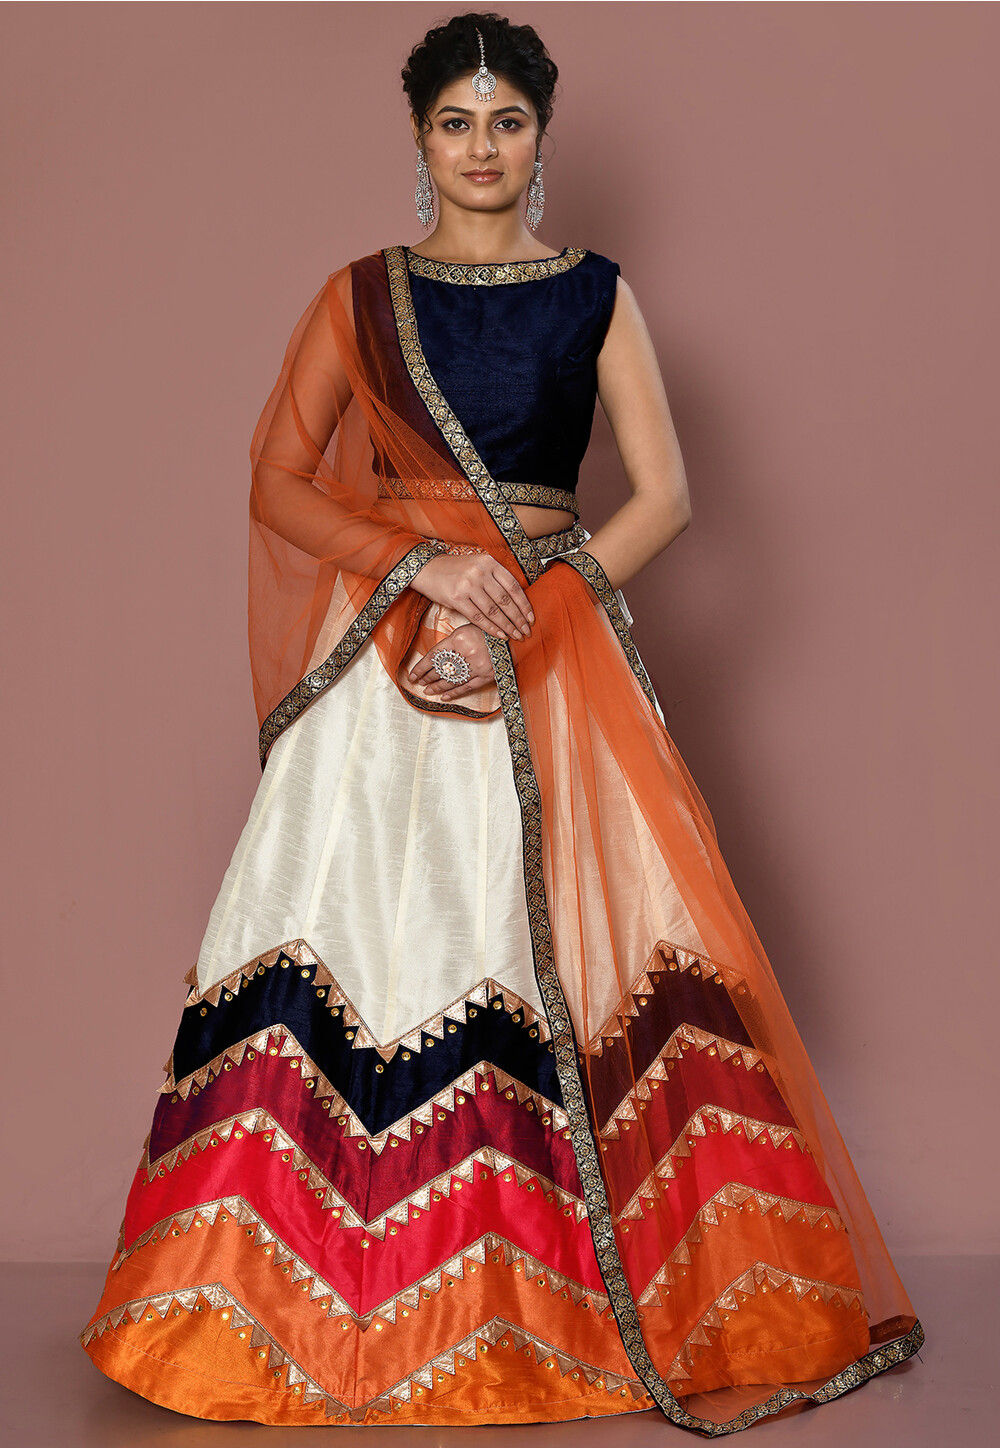 Bollywood Haute Couture - Get this red and white bridal lehenga custom made  by Gravity Fashion #redlehenga #redlenghas #custommadelehengas  #asianbridaloutfits #asianbrides #bridaloutfits #bridallehengas  #bridallengha #redwhitelehenga #gravityfashion ...